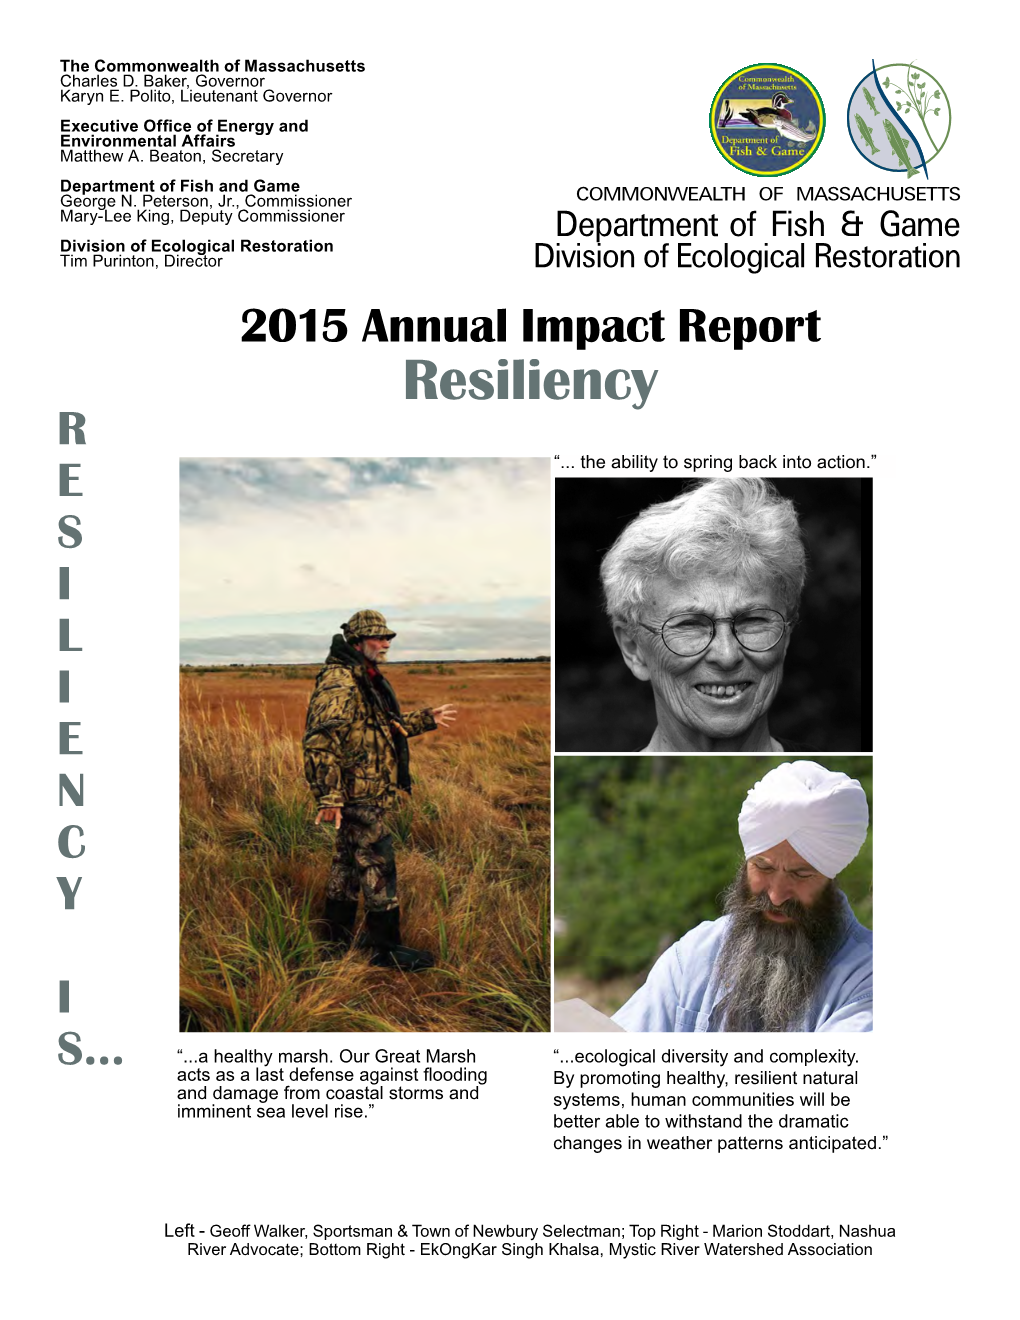 DER's 2015 Annual Report